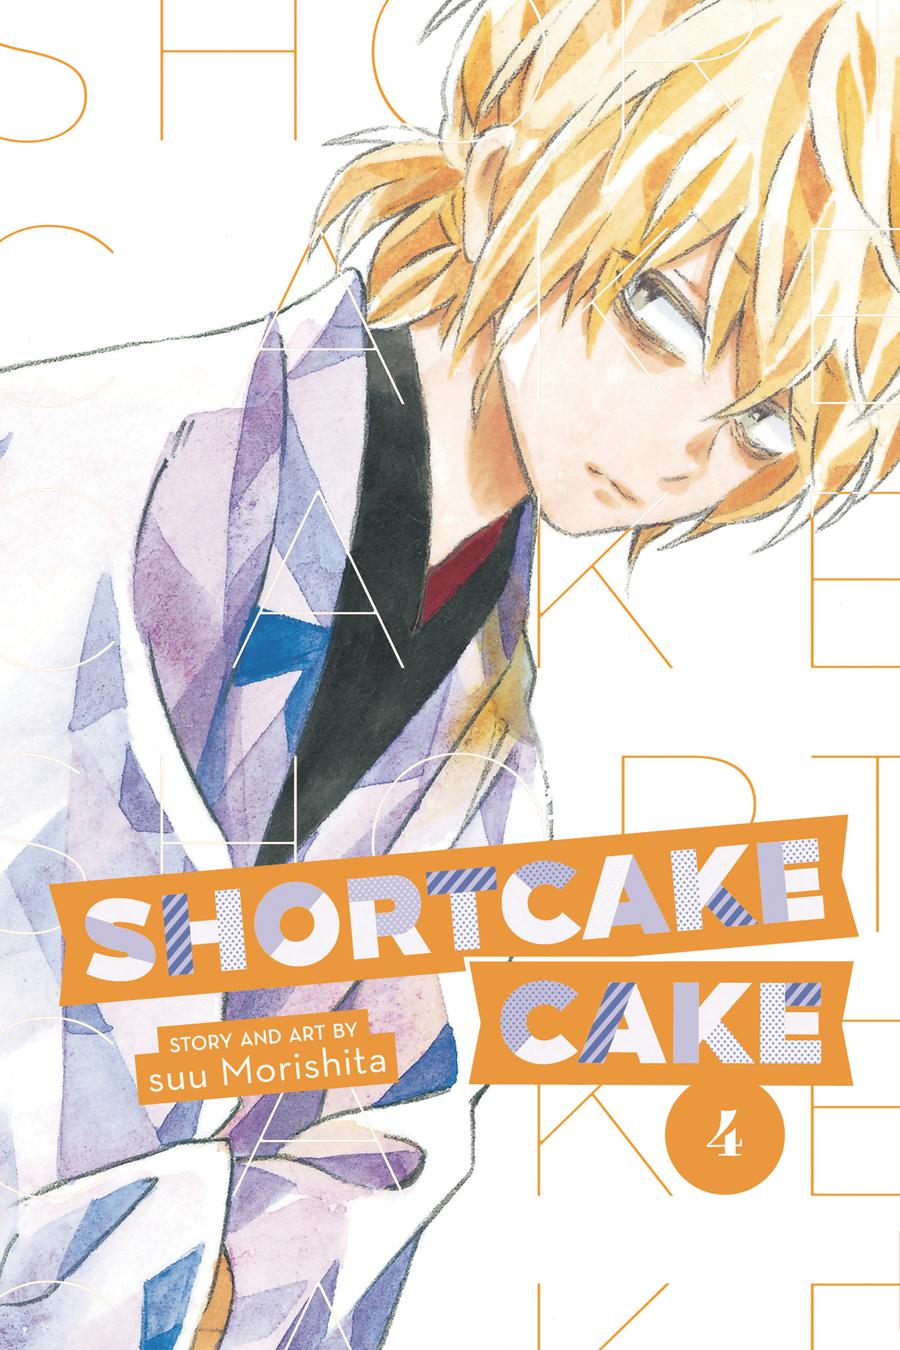 Shortcake Cake Vol 4 GN